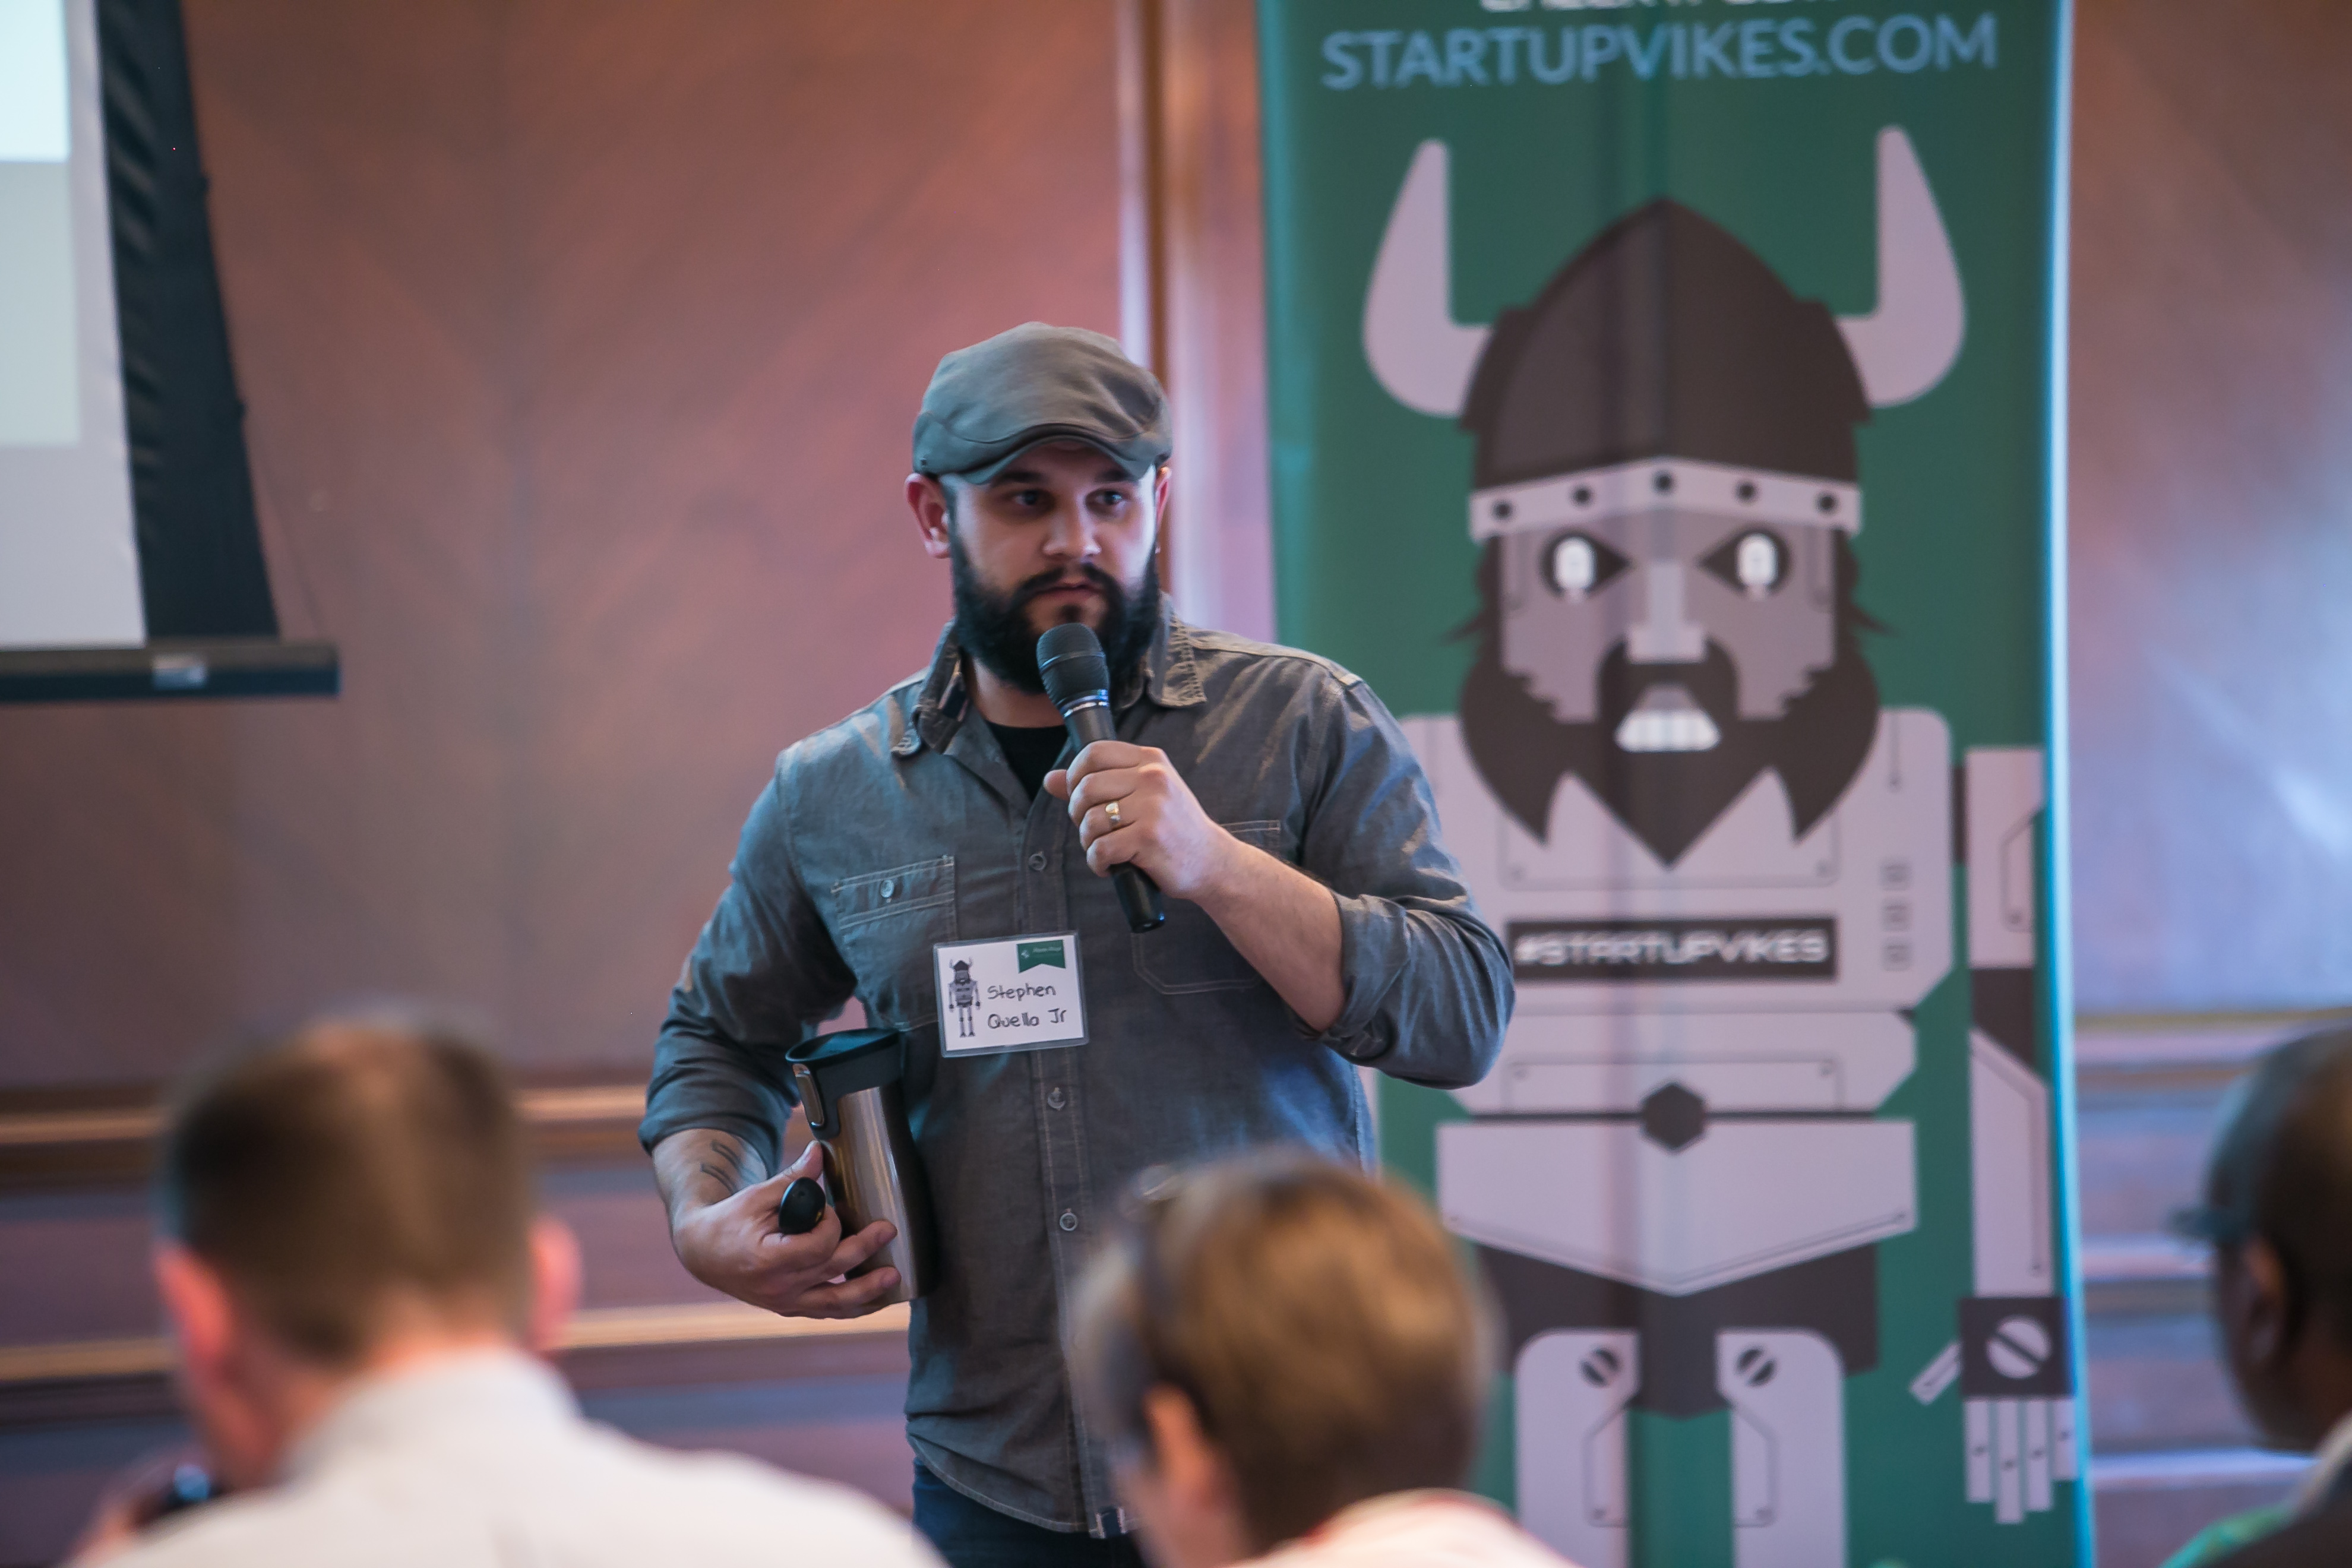 Stephen Quella - Presenting at Startup Vikes 2015